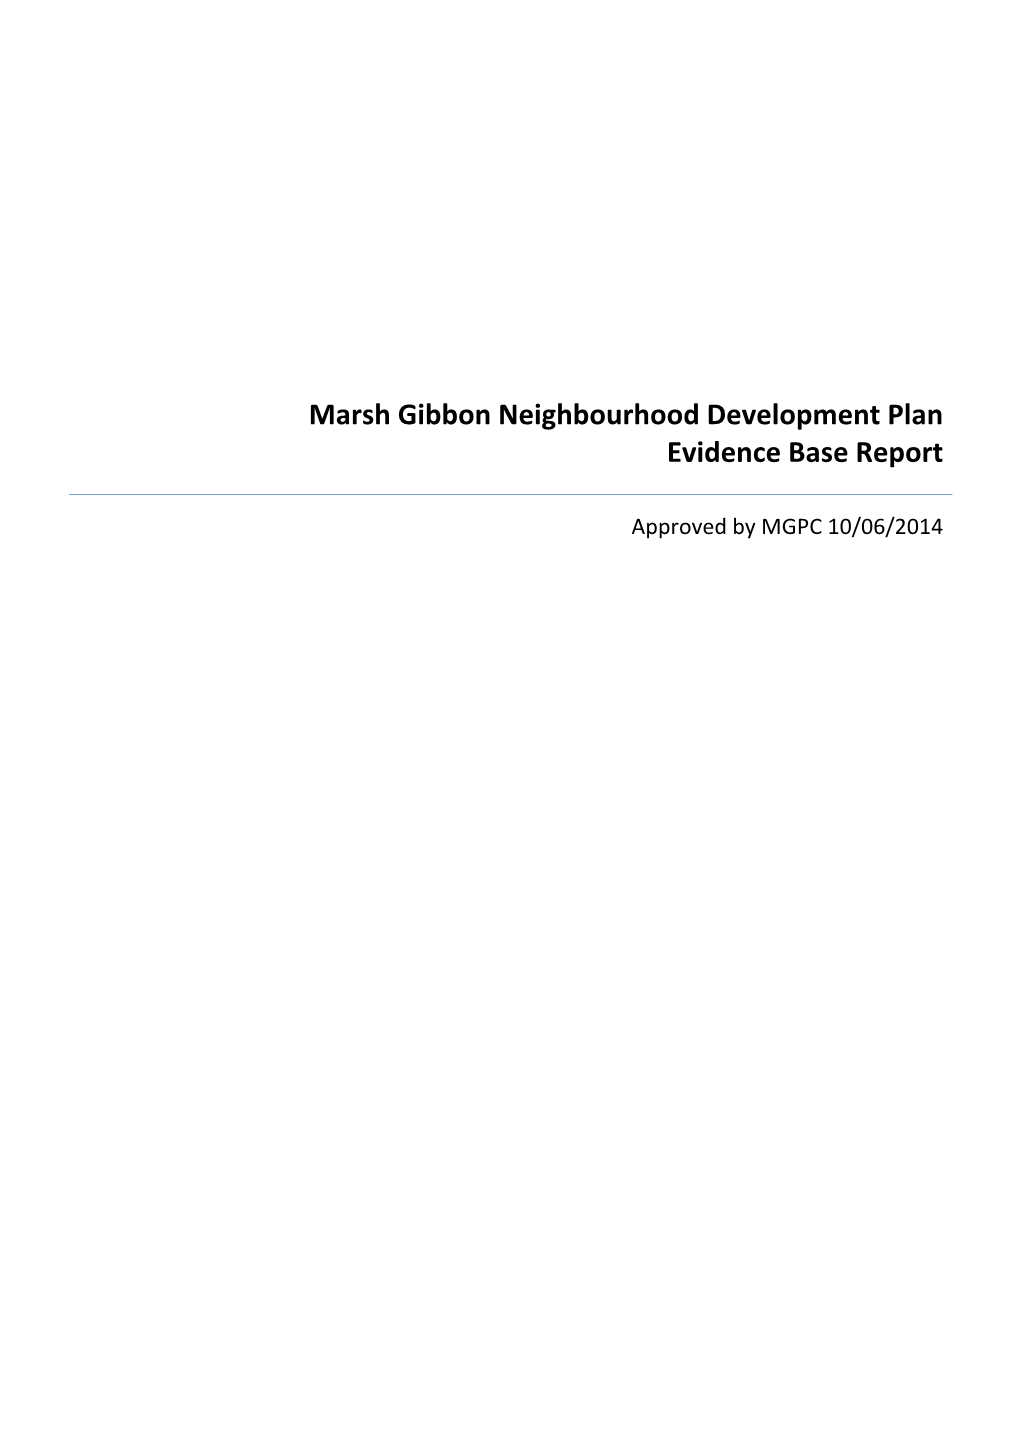 Marsh Gibbon Neighbourhood Development Plan Evidence Base Report